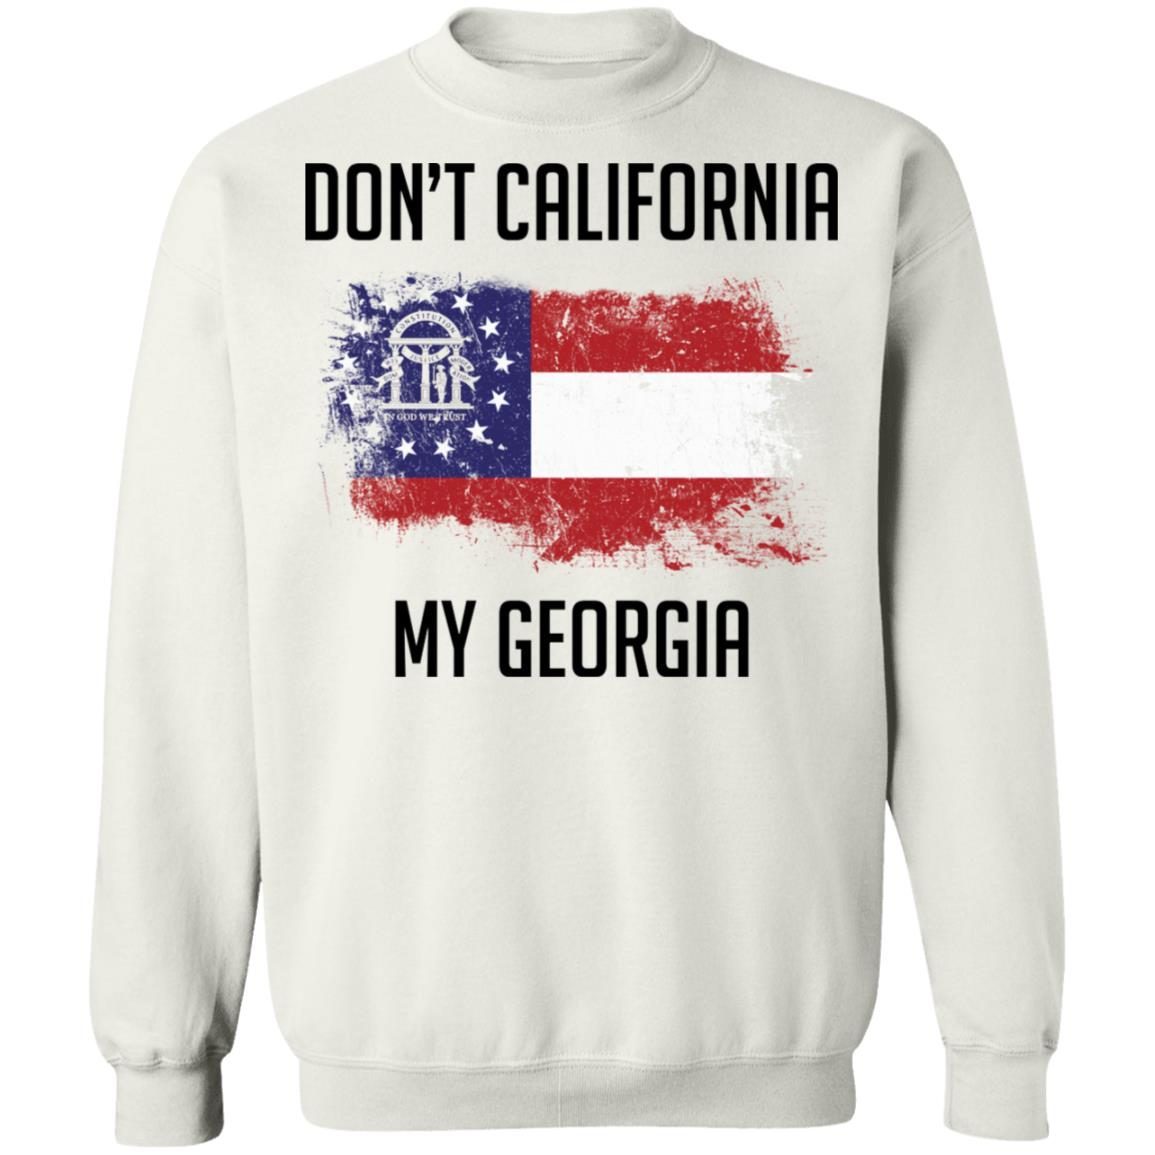 Don’t California my Georgia shirt